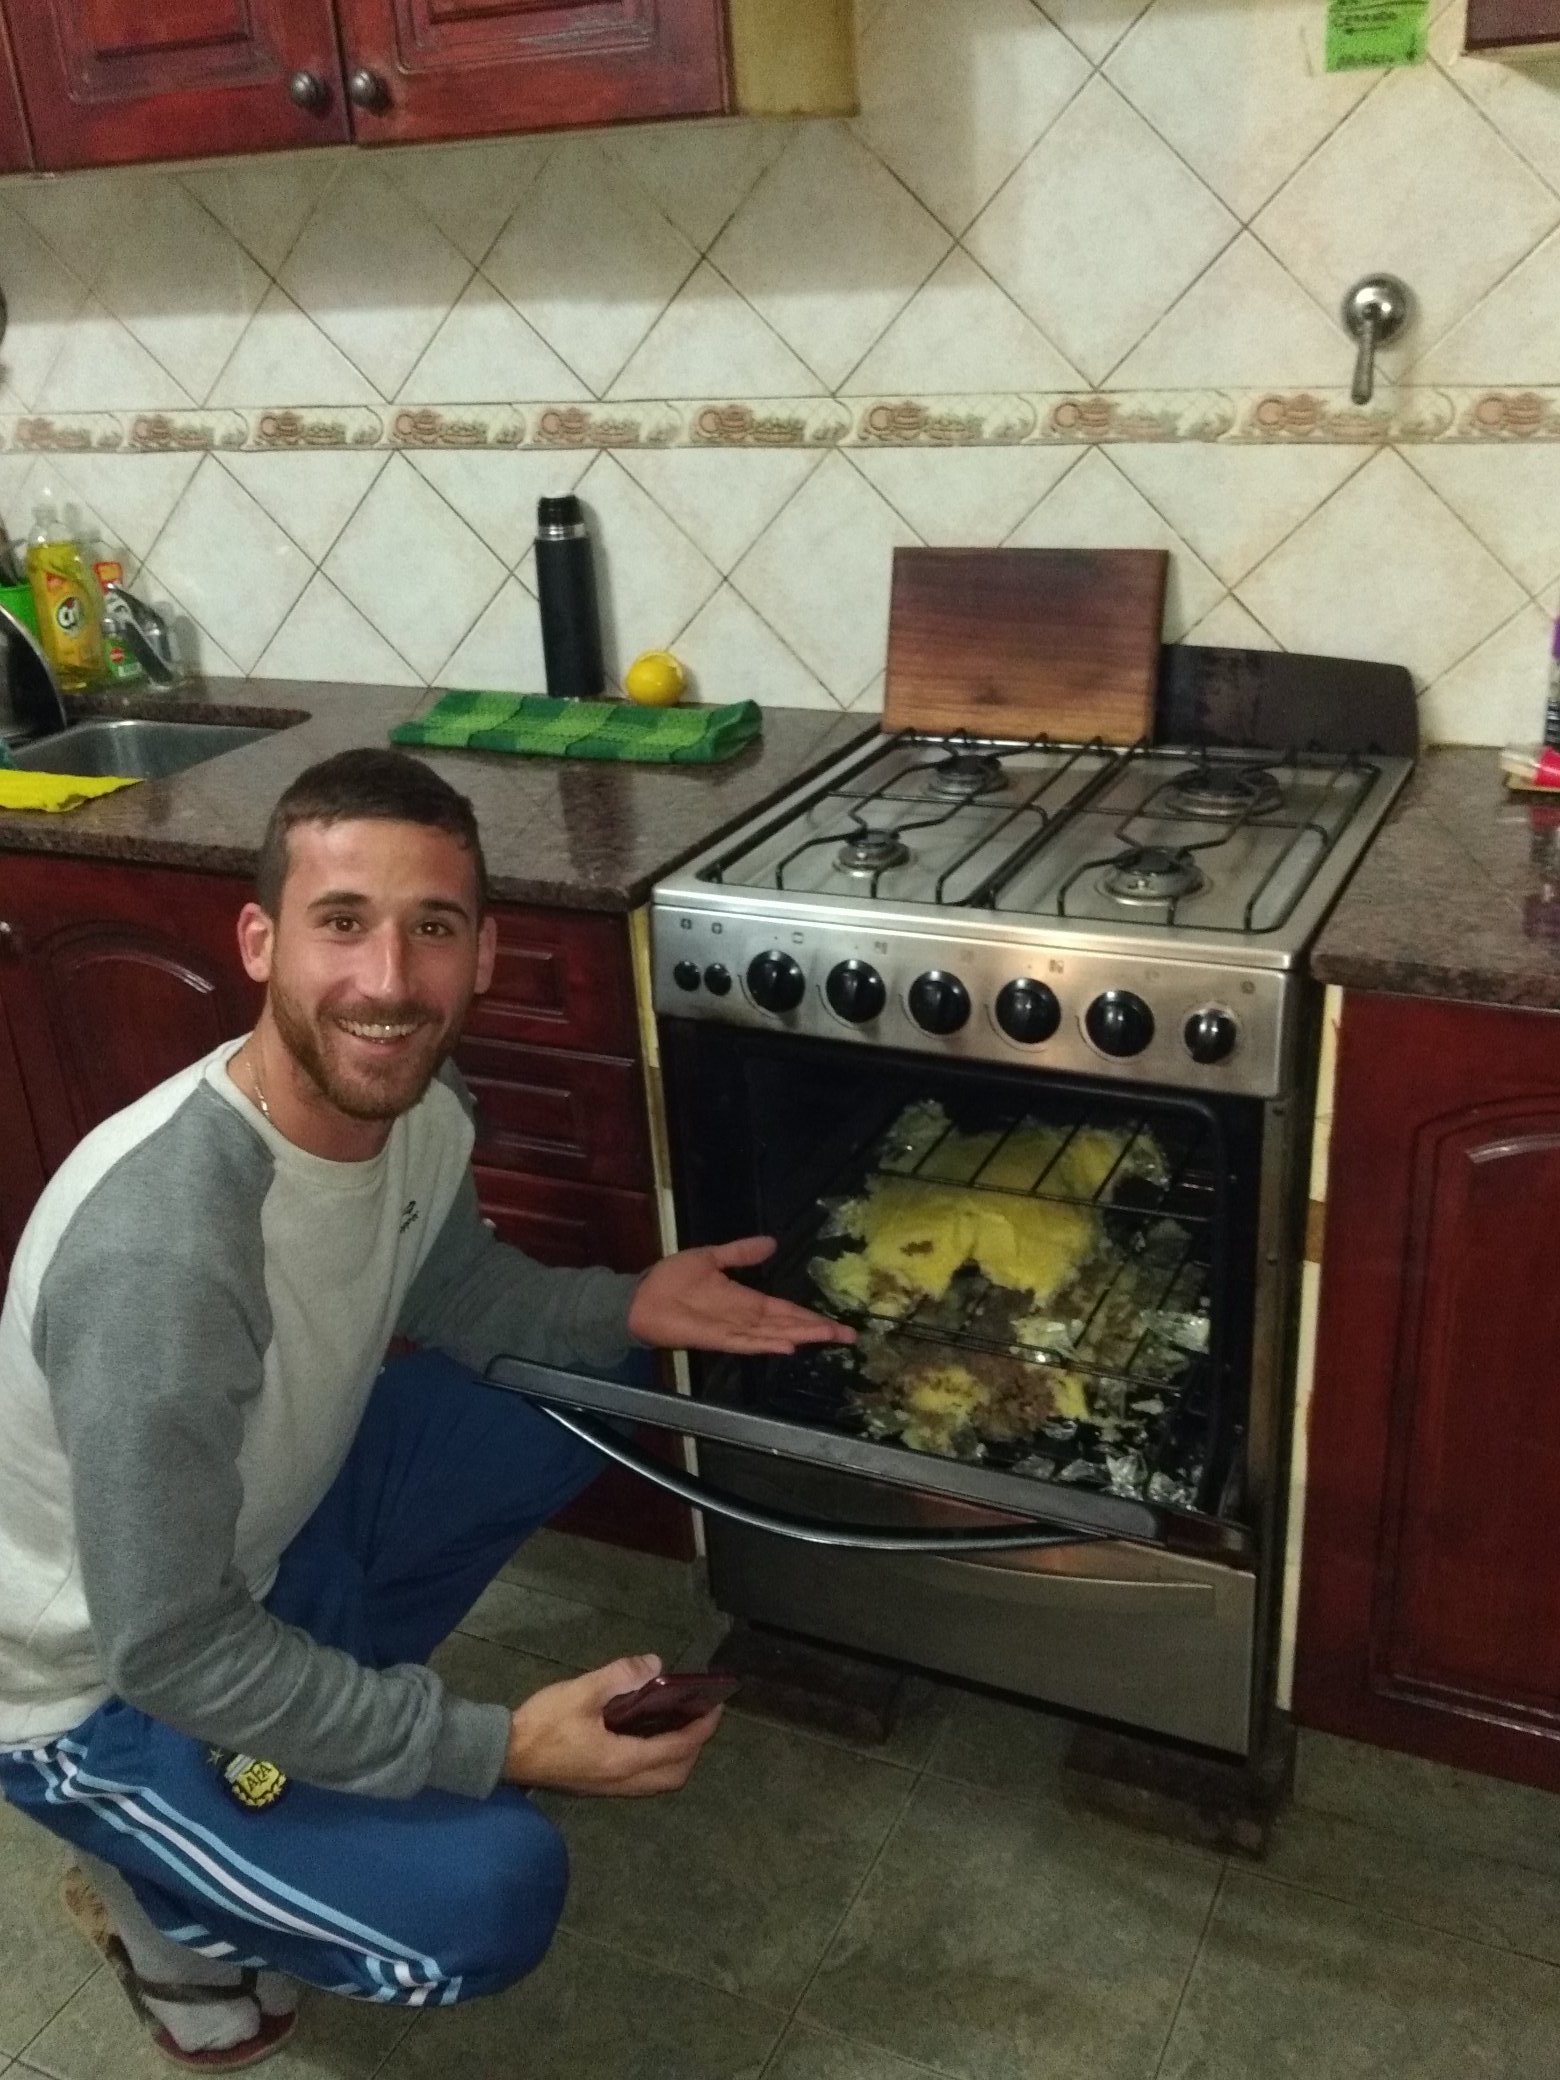 تويتر \ santî على تويتر: "A mi hermano solo le pasa que cocina y explota el  pastel de papa en el horno jajaajajaja todo lleno de vidrio  https://t.co/14hsmECwjl"